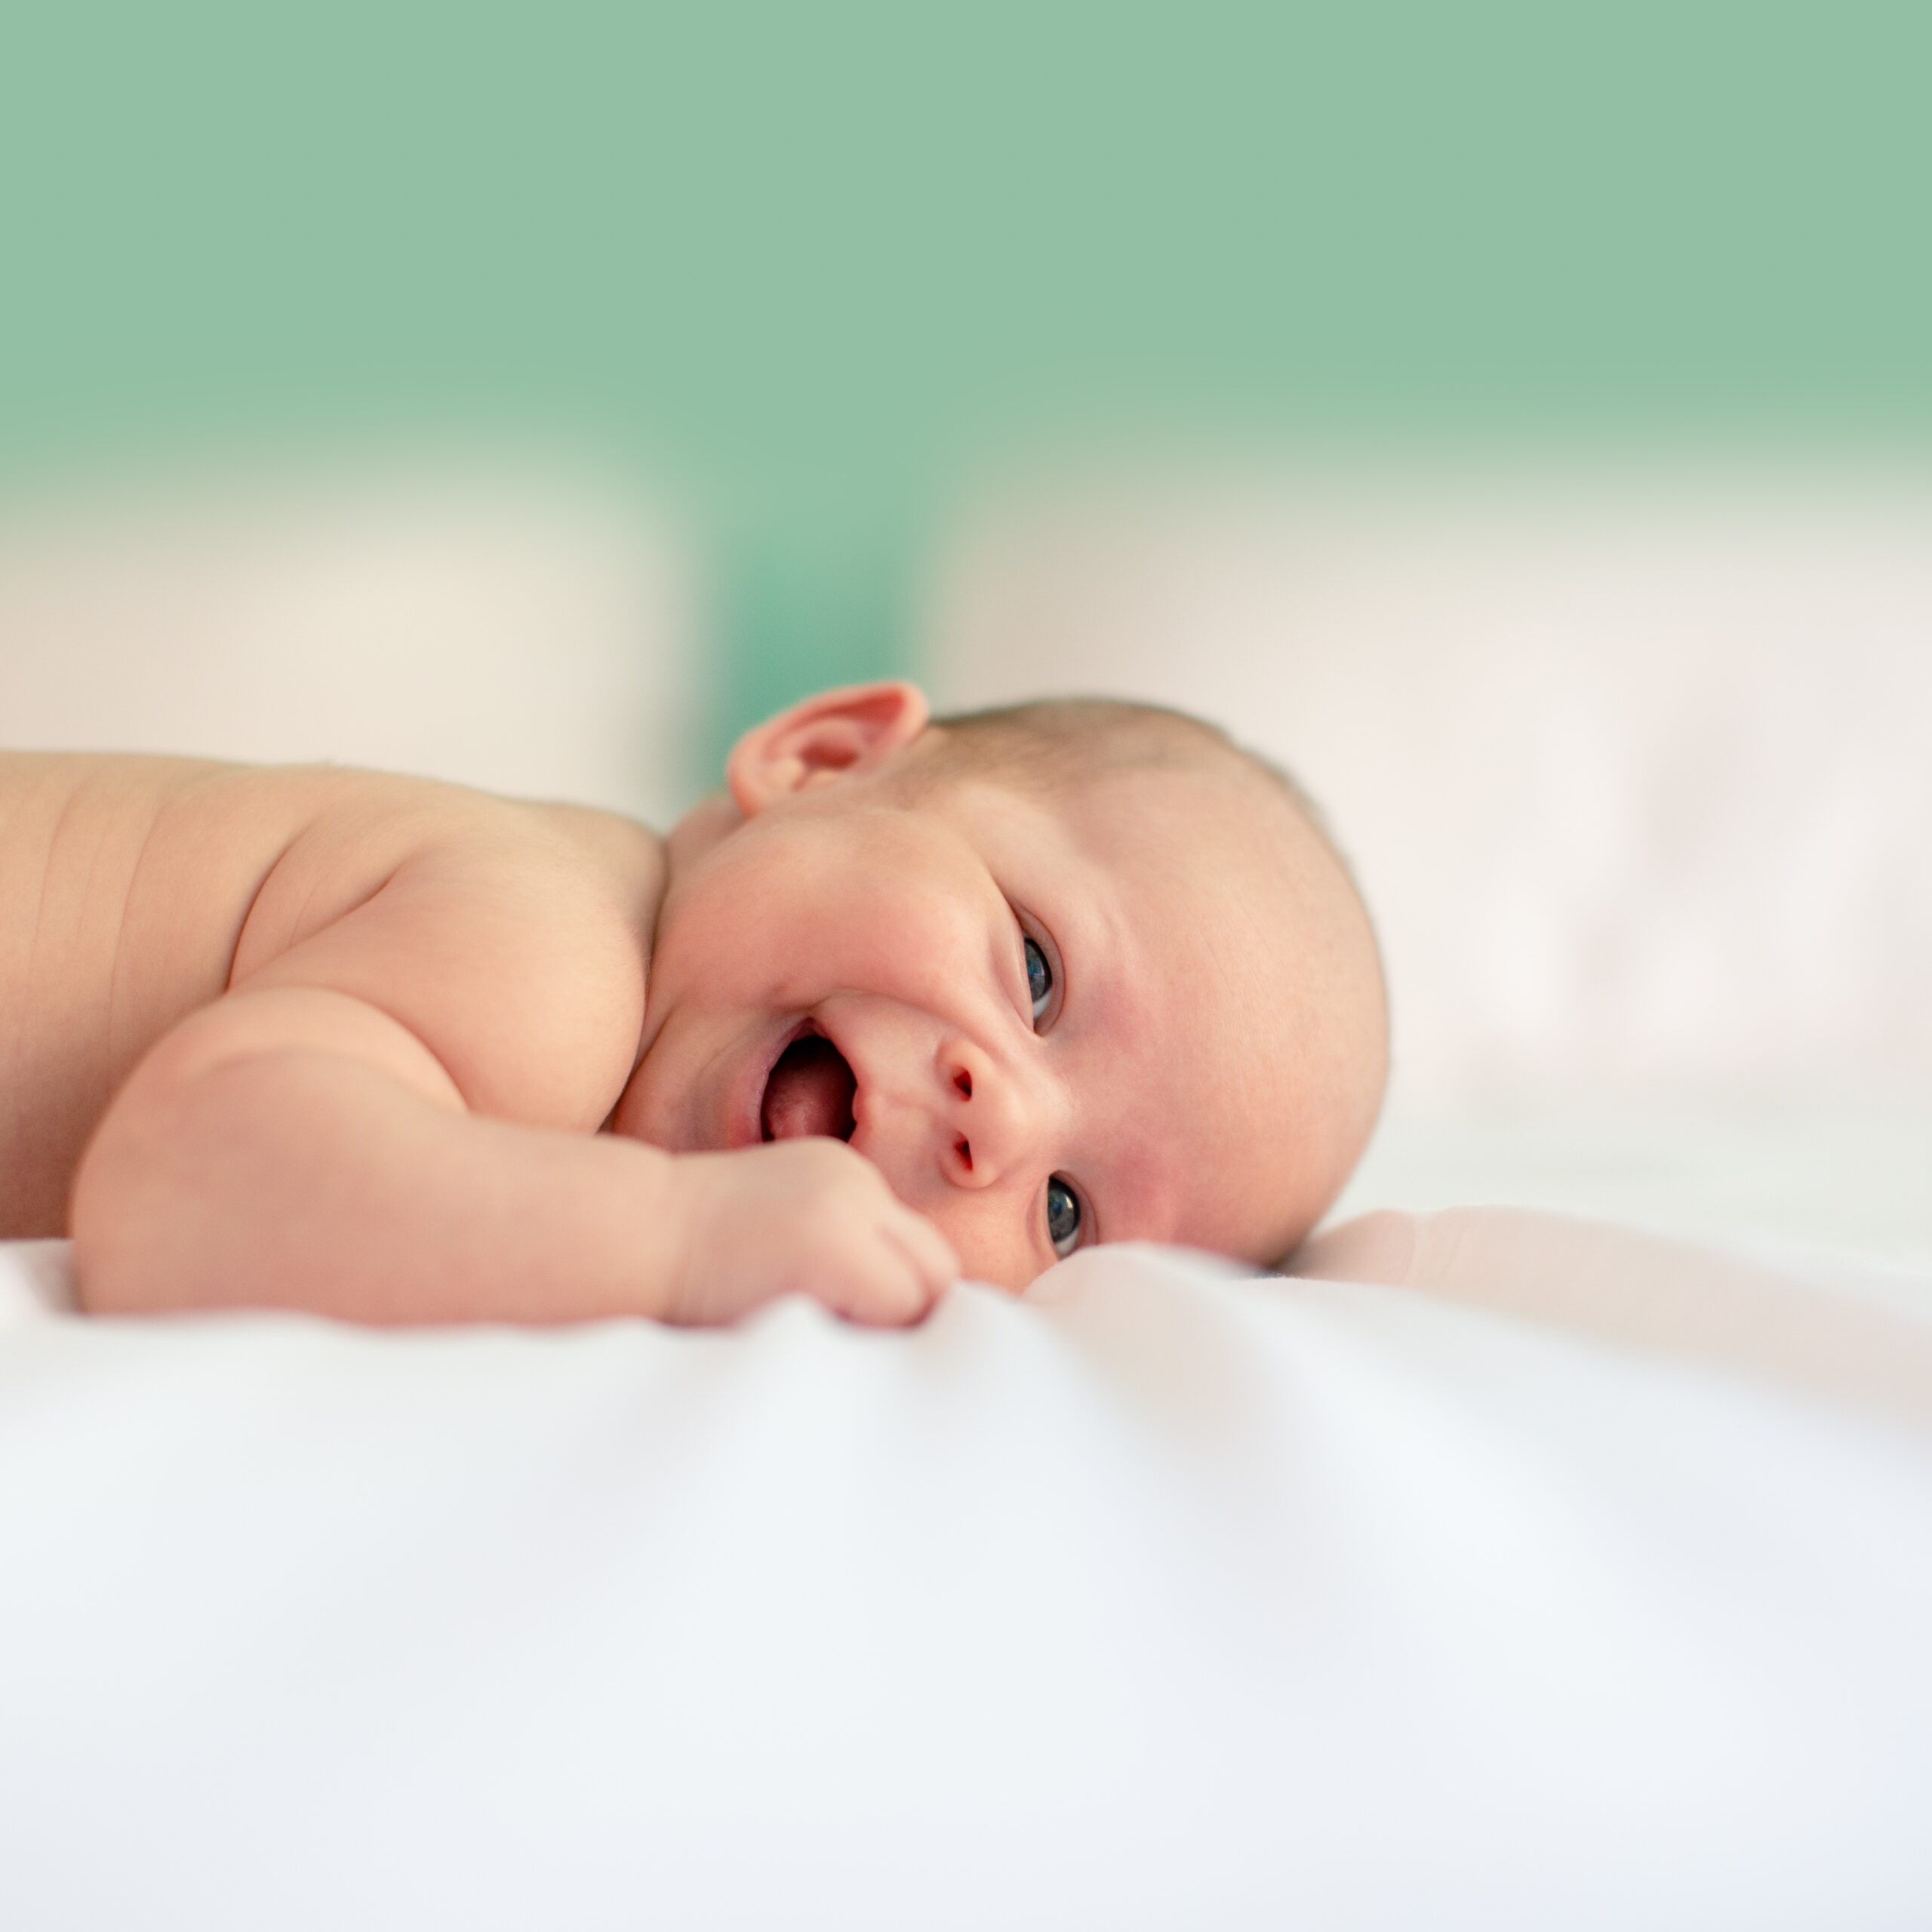 10 Unique and Heartwarming Newborn Baby Gift Ideas